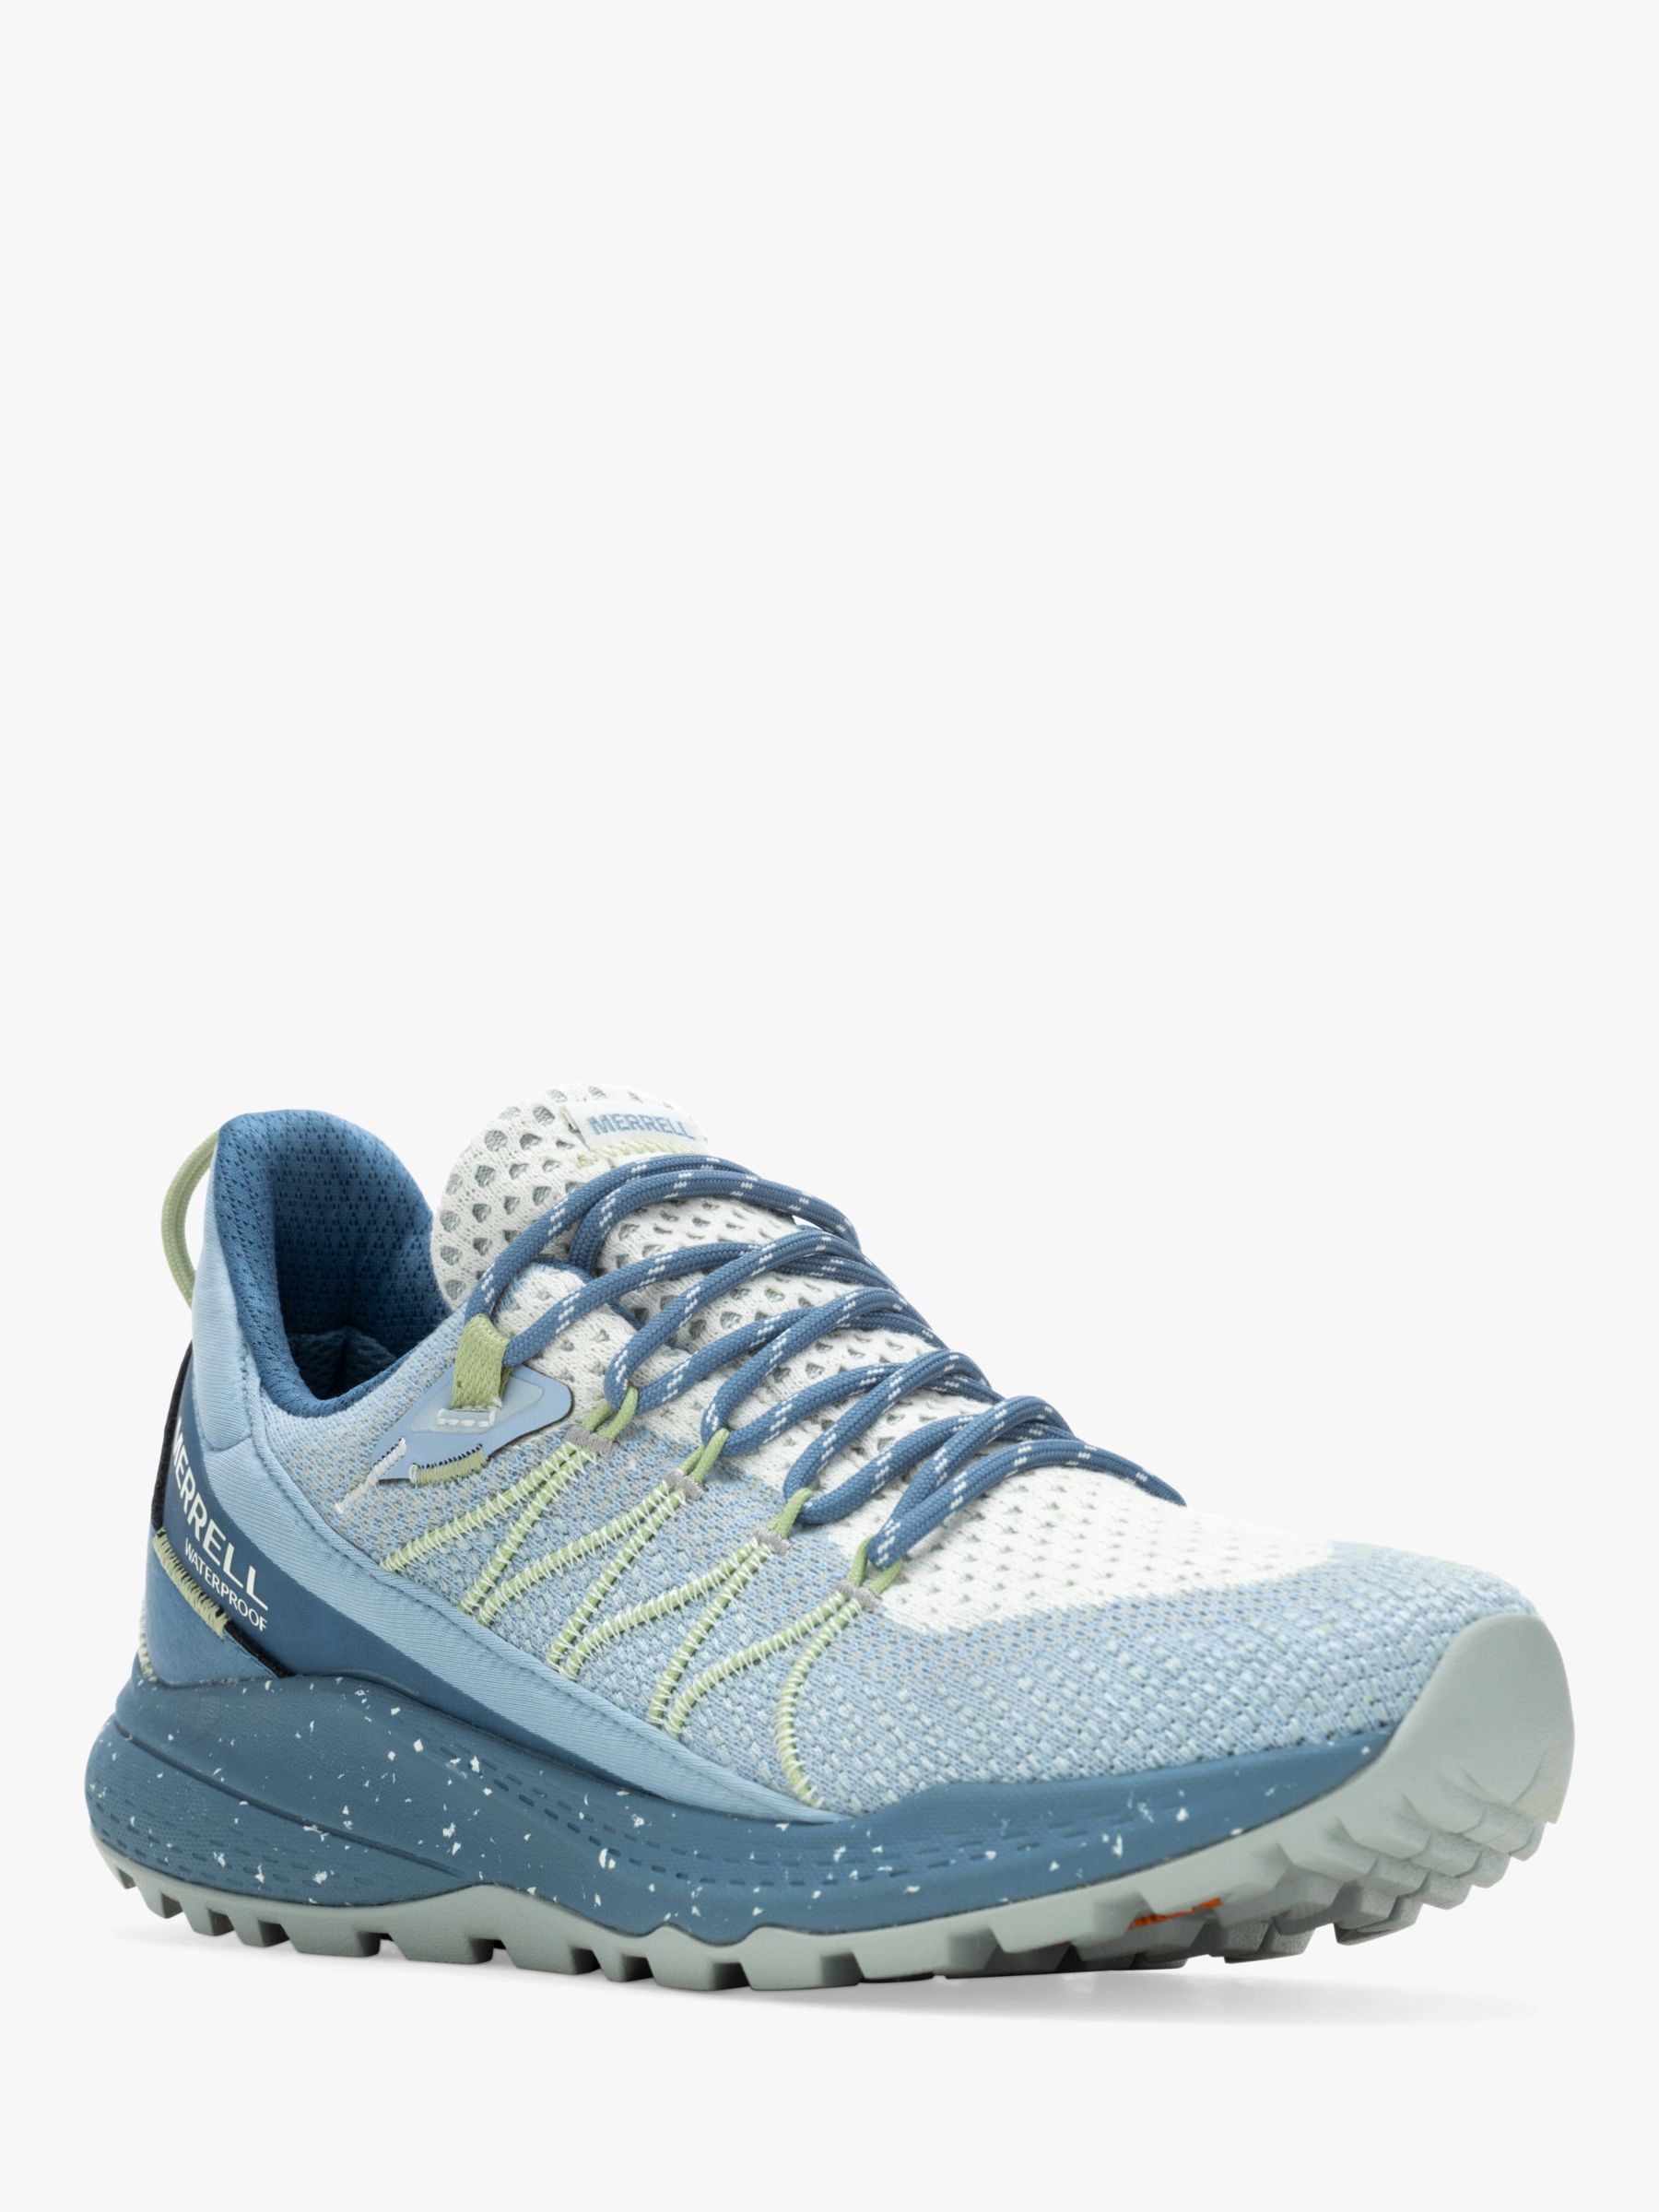 Merrell Bravada Waterproof Low Hiking Shoes - Women's